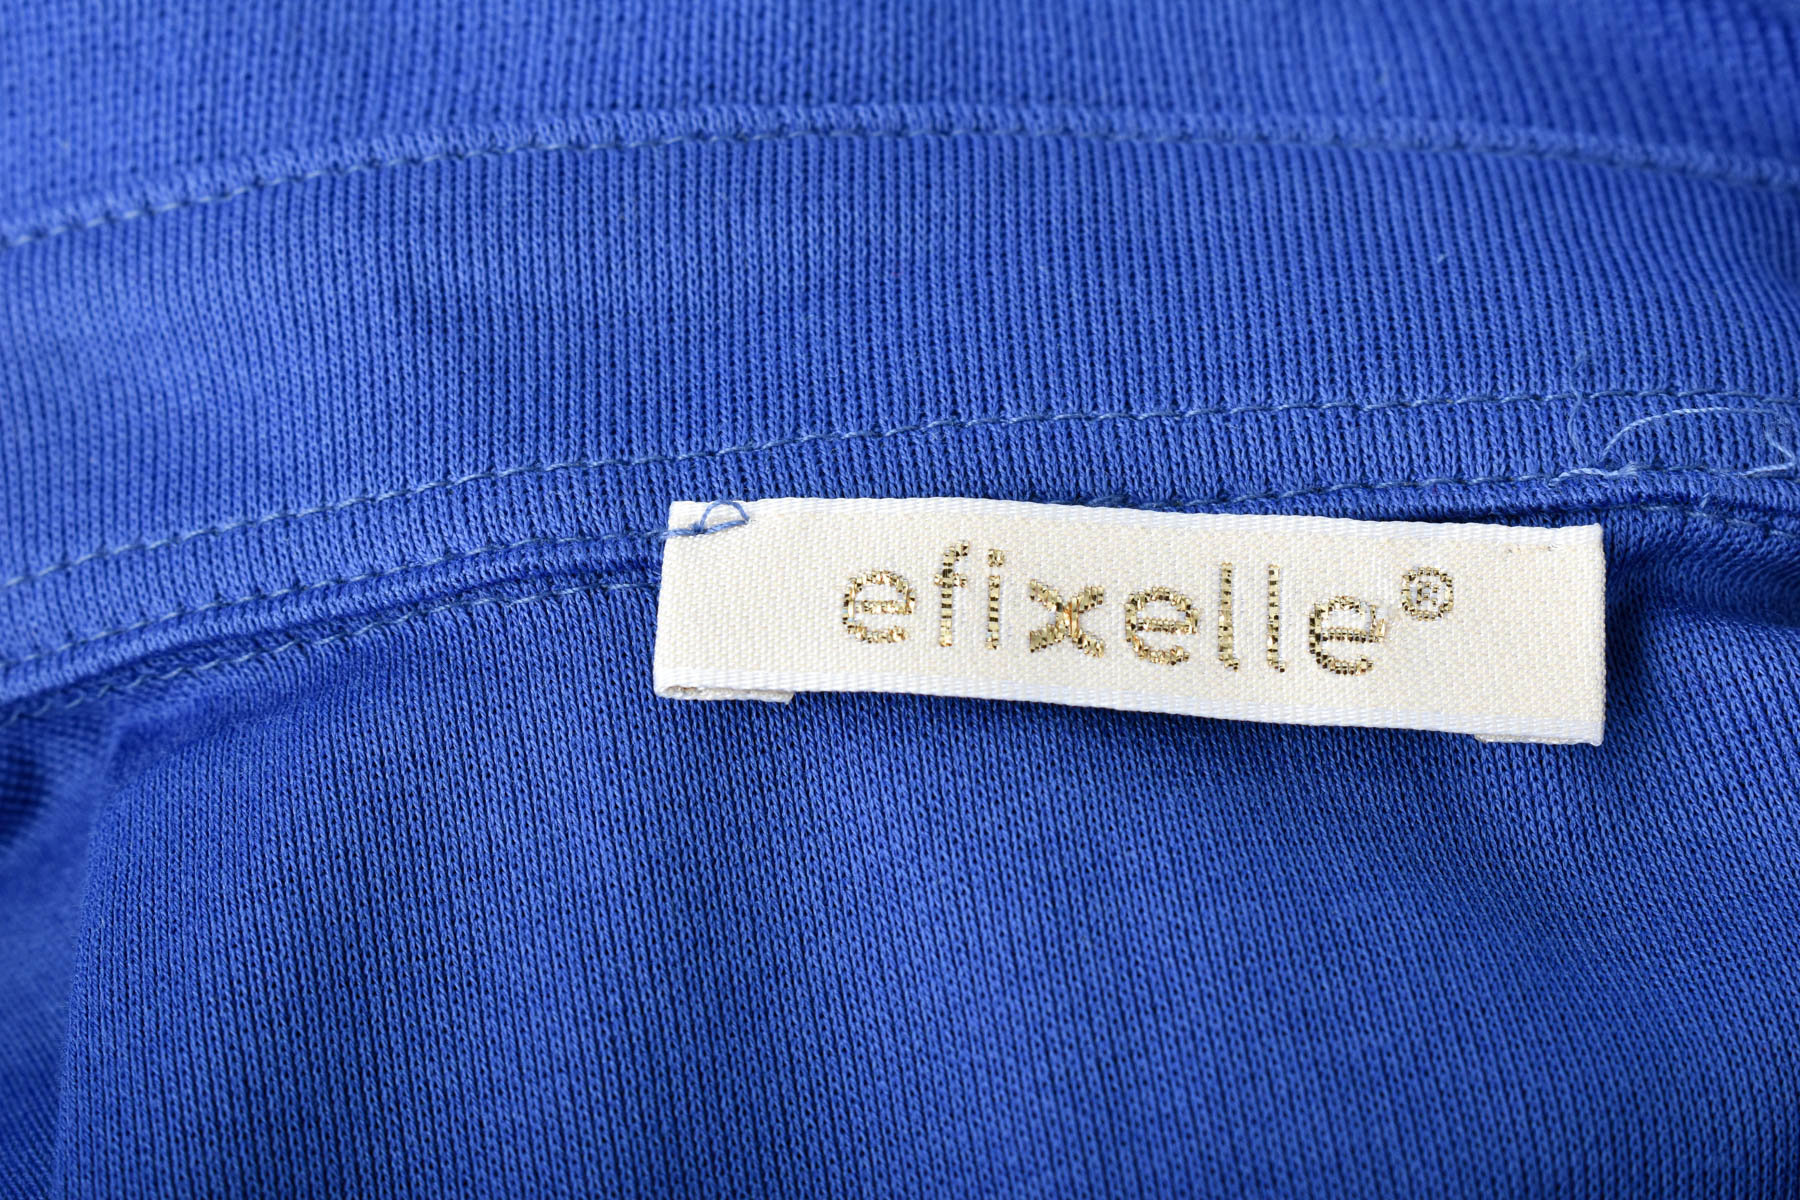 Дамска тениска - Efixelle - 2